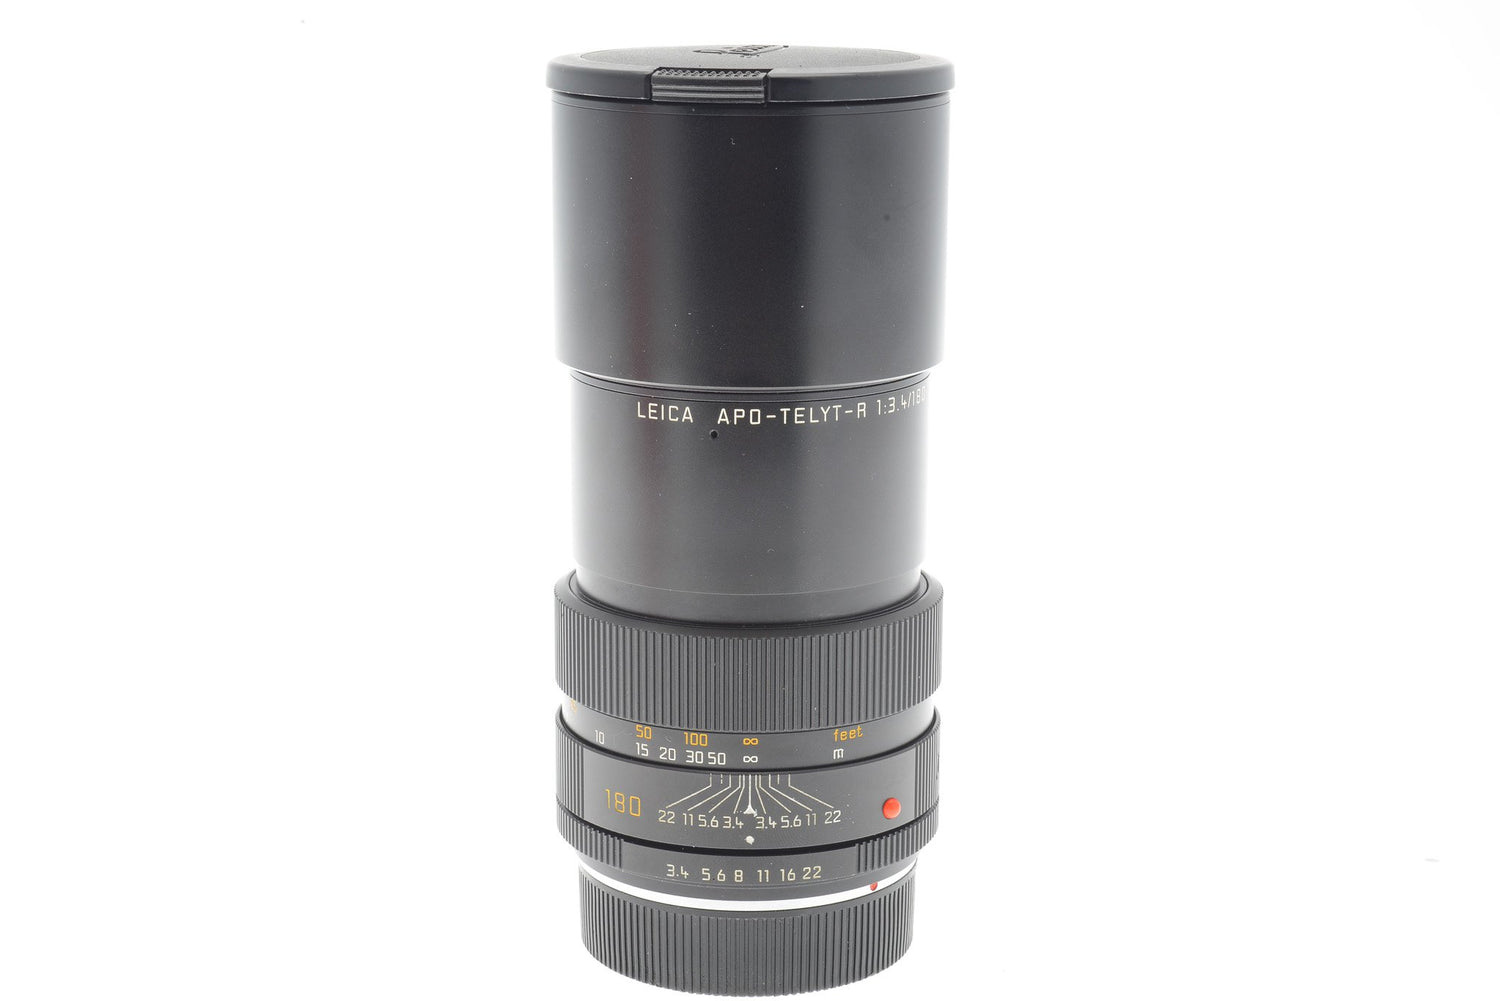 Leica 180mm f3.4 APO-Telyt-R (3-cam) - Lens